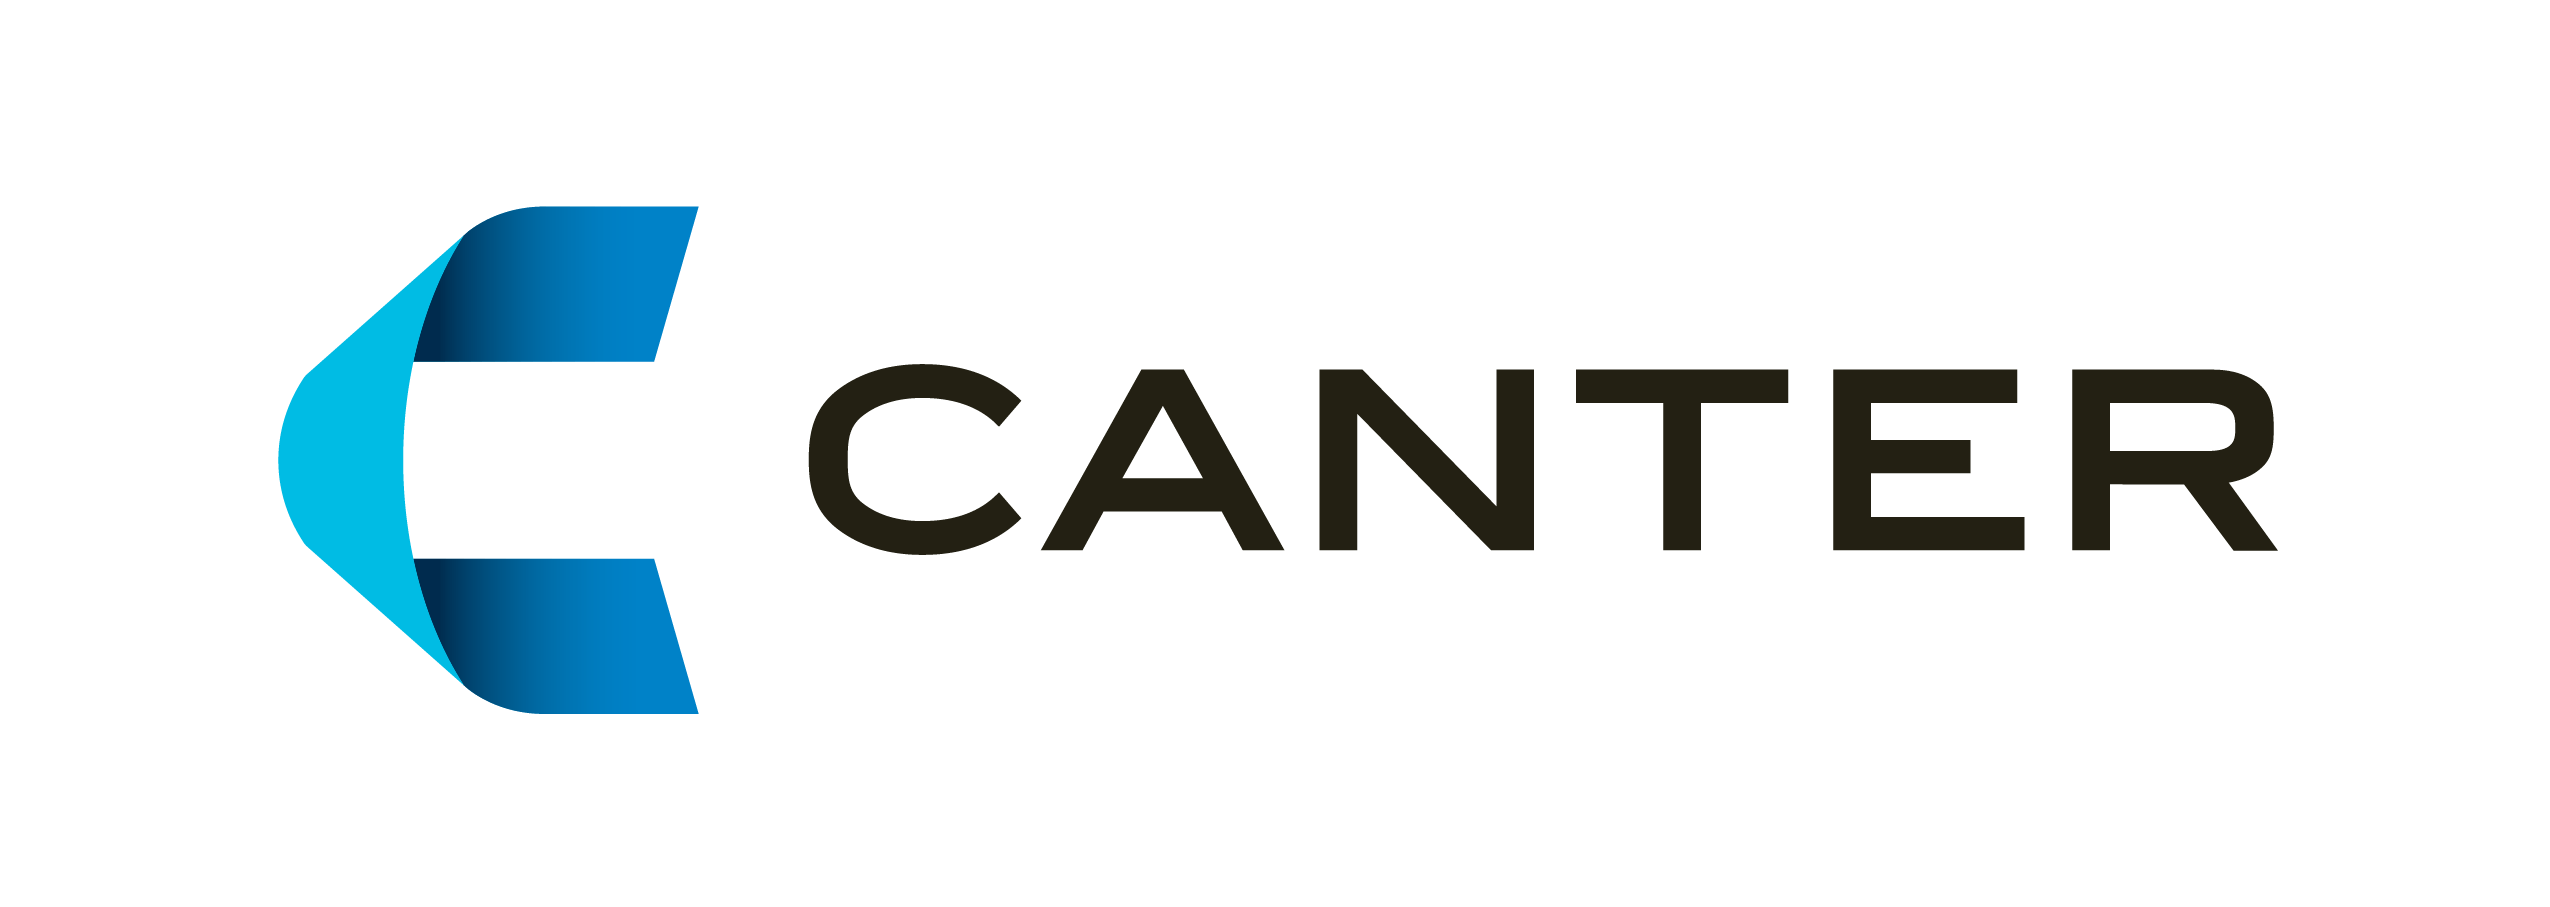 Canter Companies